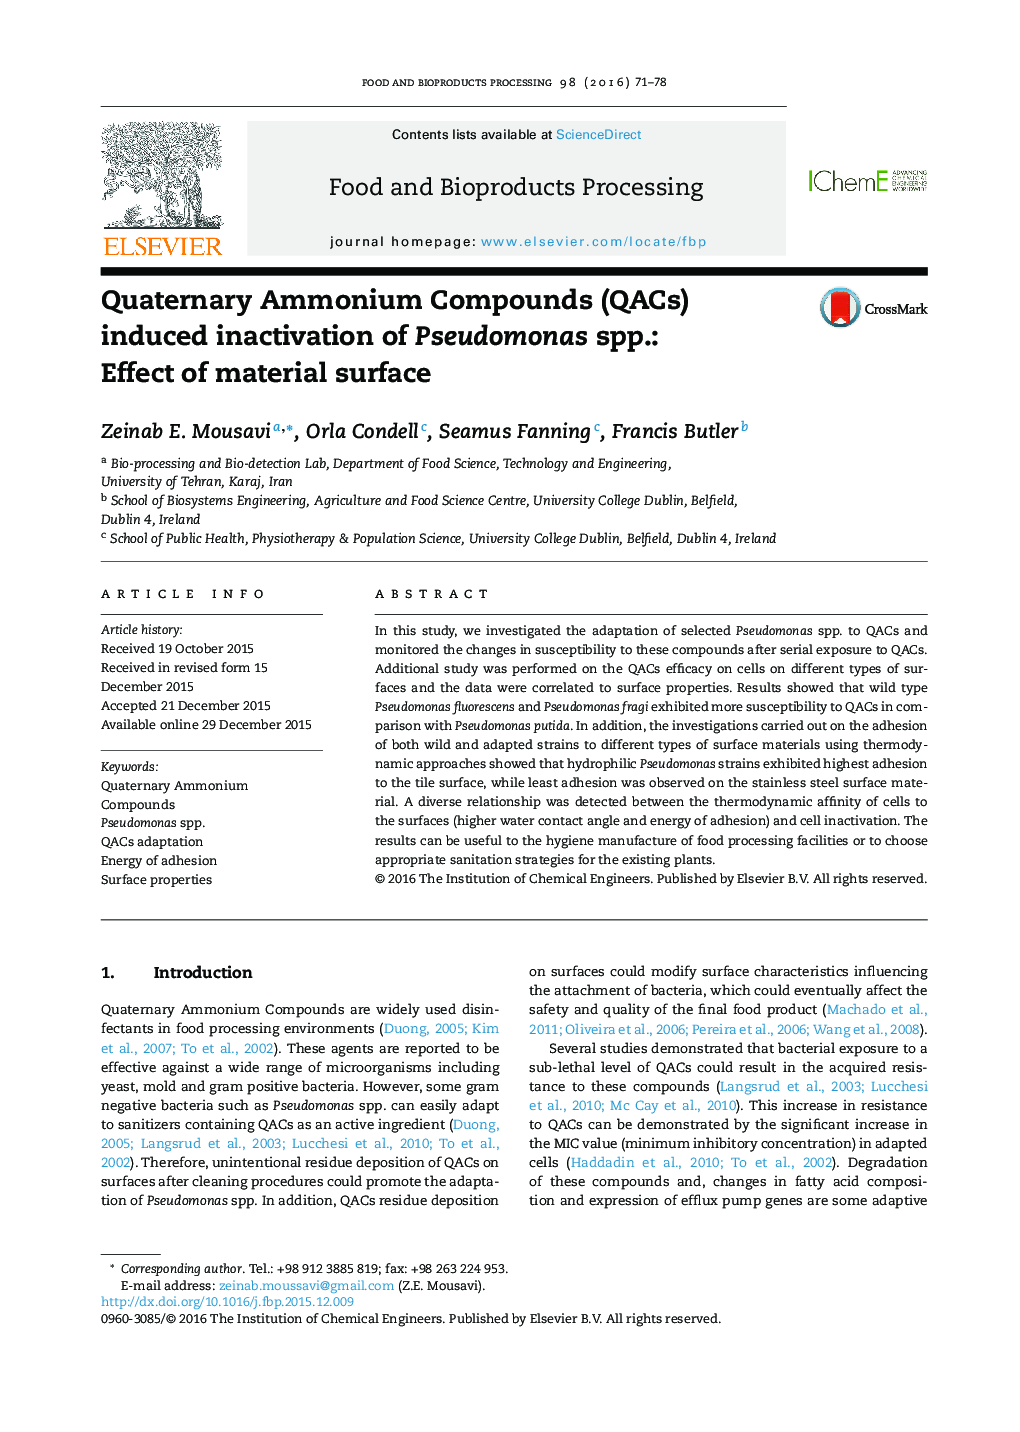 غیر فعال کردن ترکیبات  آمونیوم کواترنر (QACs) ناشی از پسودوموناس .: اثر سطح مواد